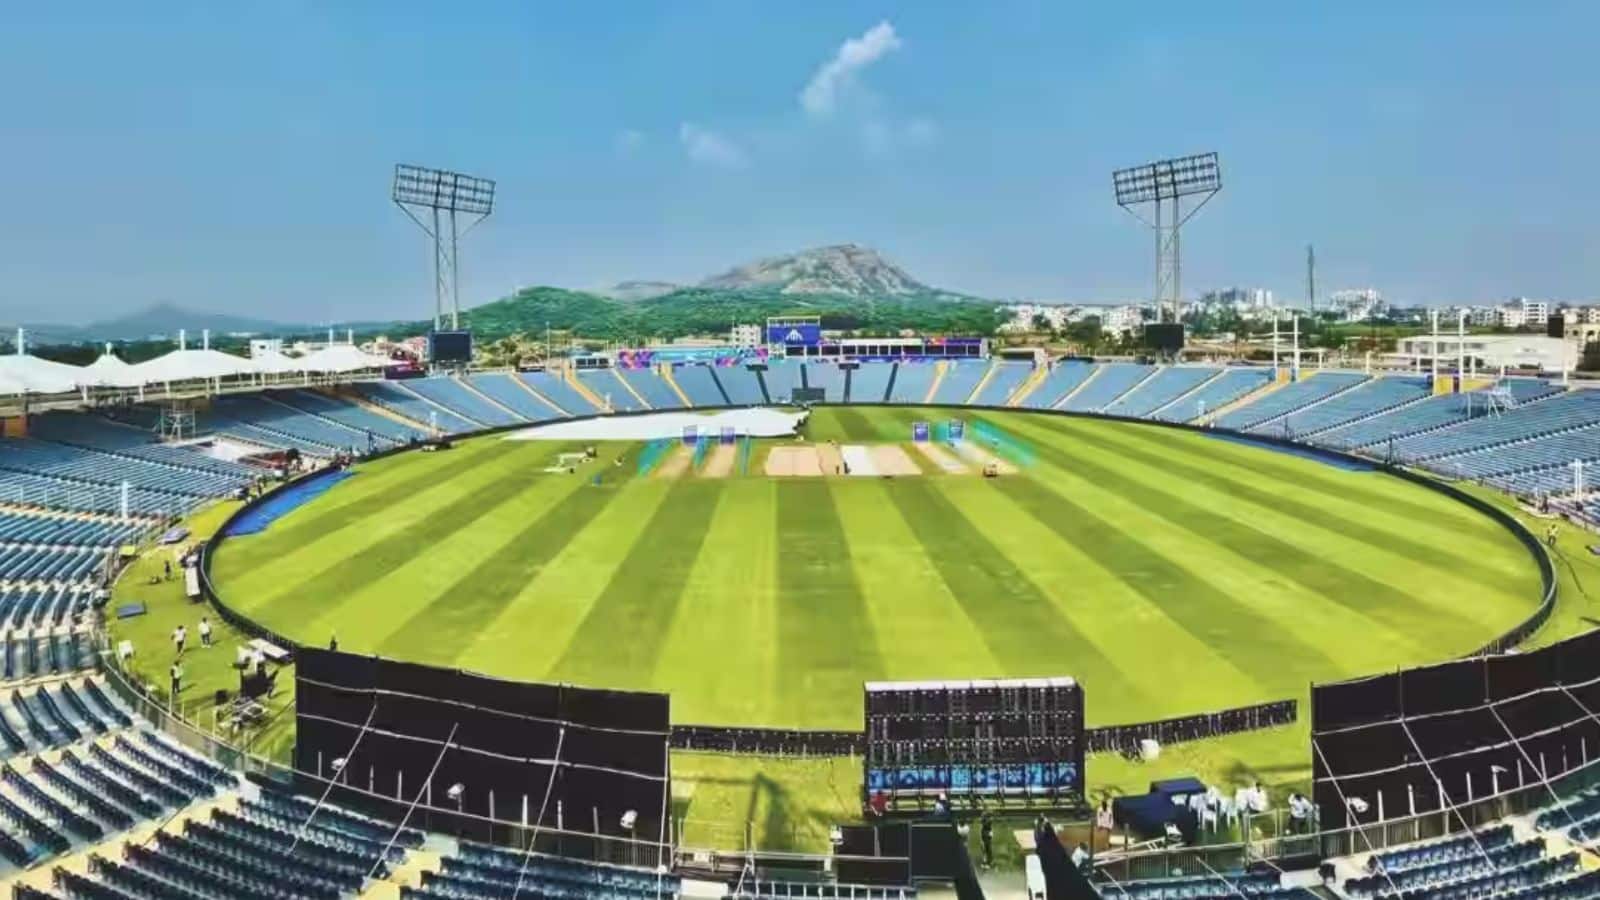 Maharashtra Cricket Association Stadium Pune Ground Stats For ENG vs NED World Cup Match